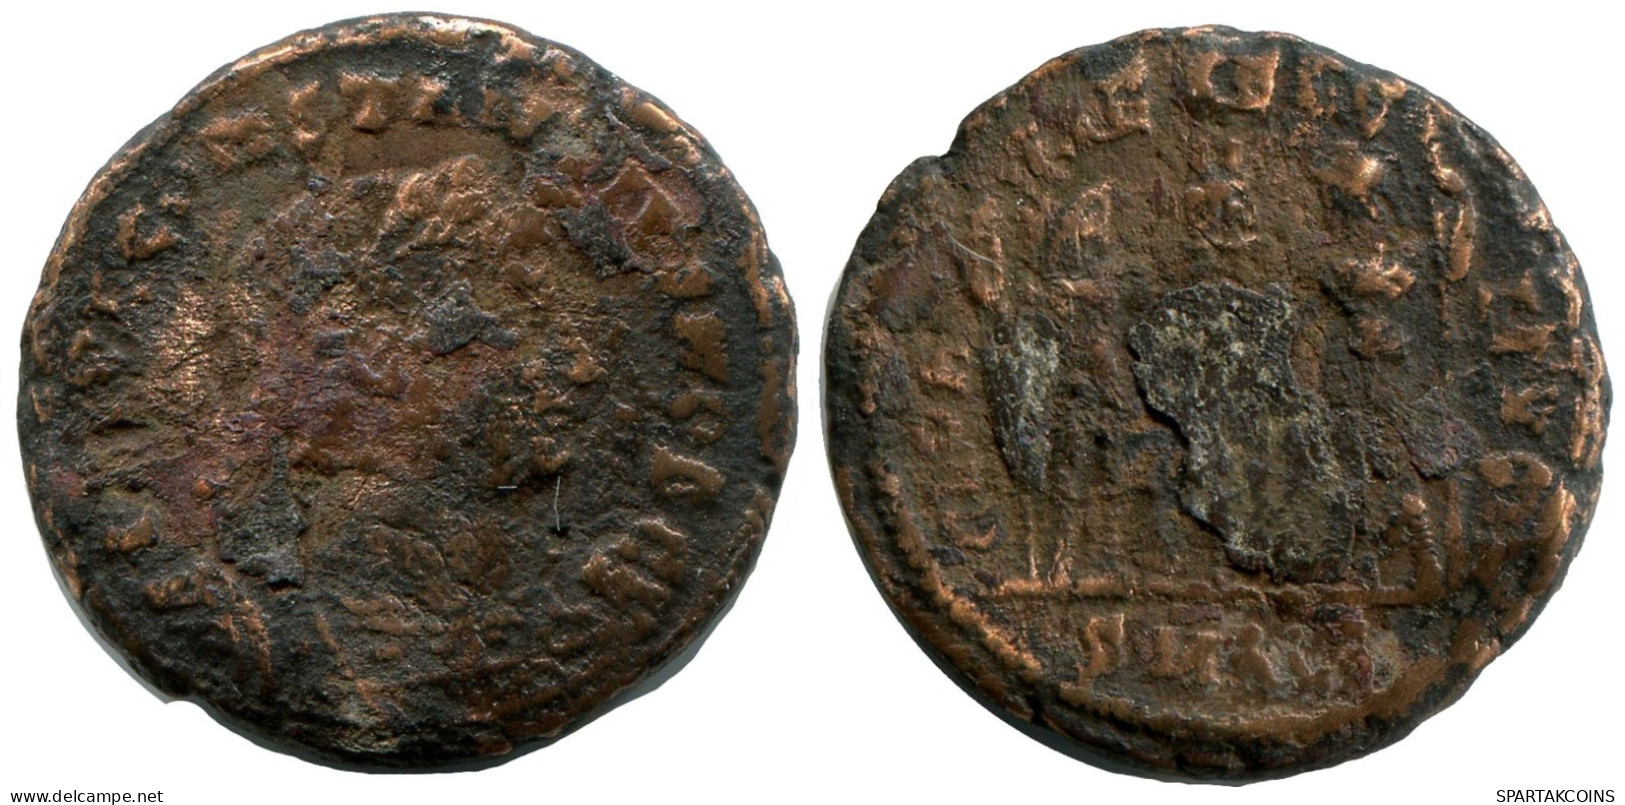 CONSTANTIUS II MINTED IN ALEKSANDRIA FOUND IN IHNASYAH HOARD #ANC10453.14.E.A - The Christian Empire (307 AD To 363 AD)